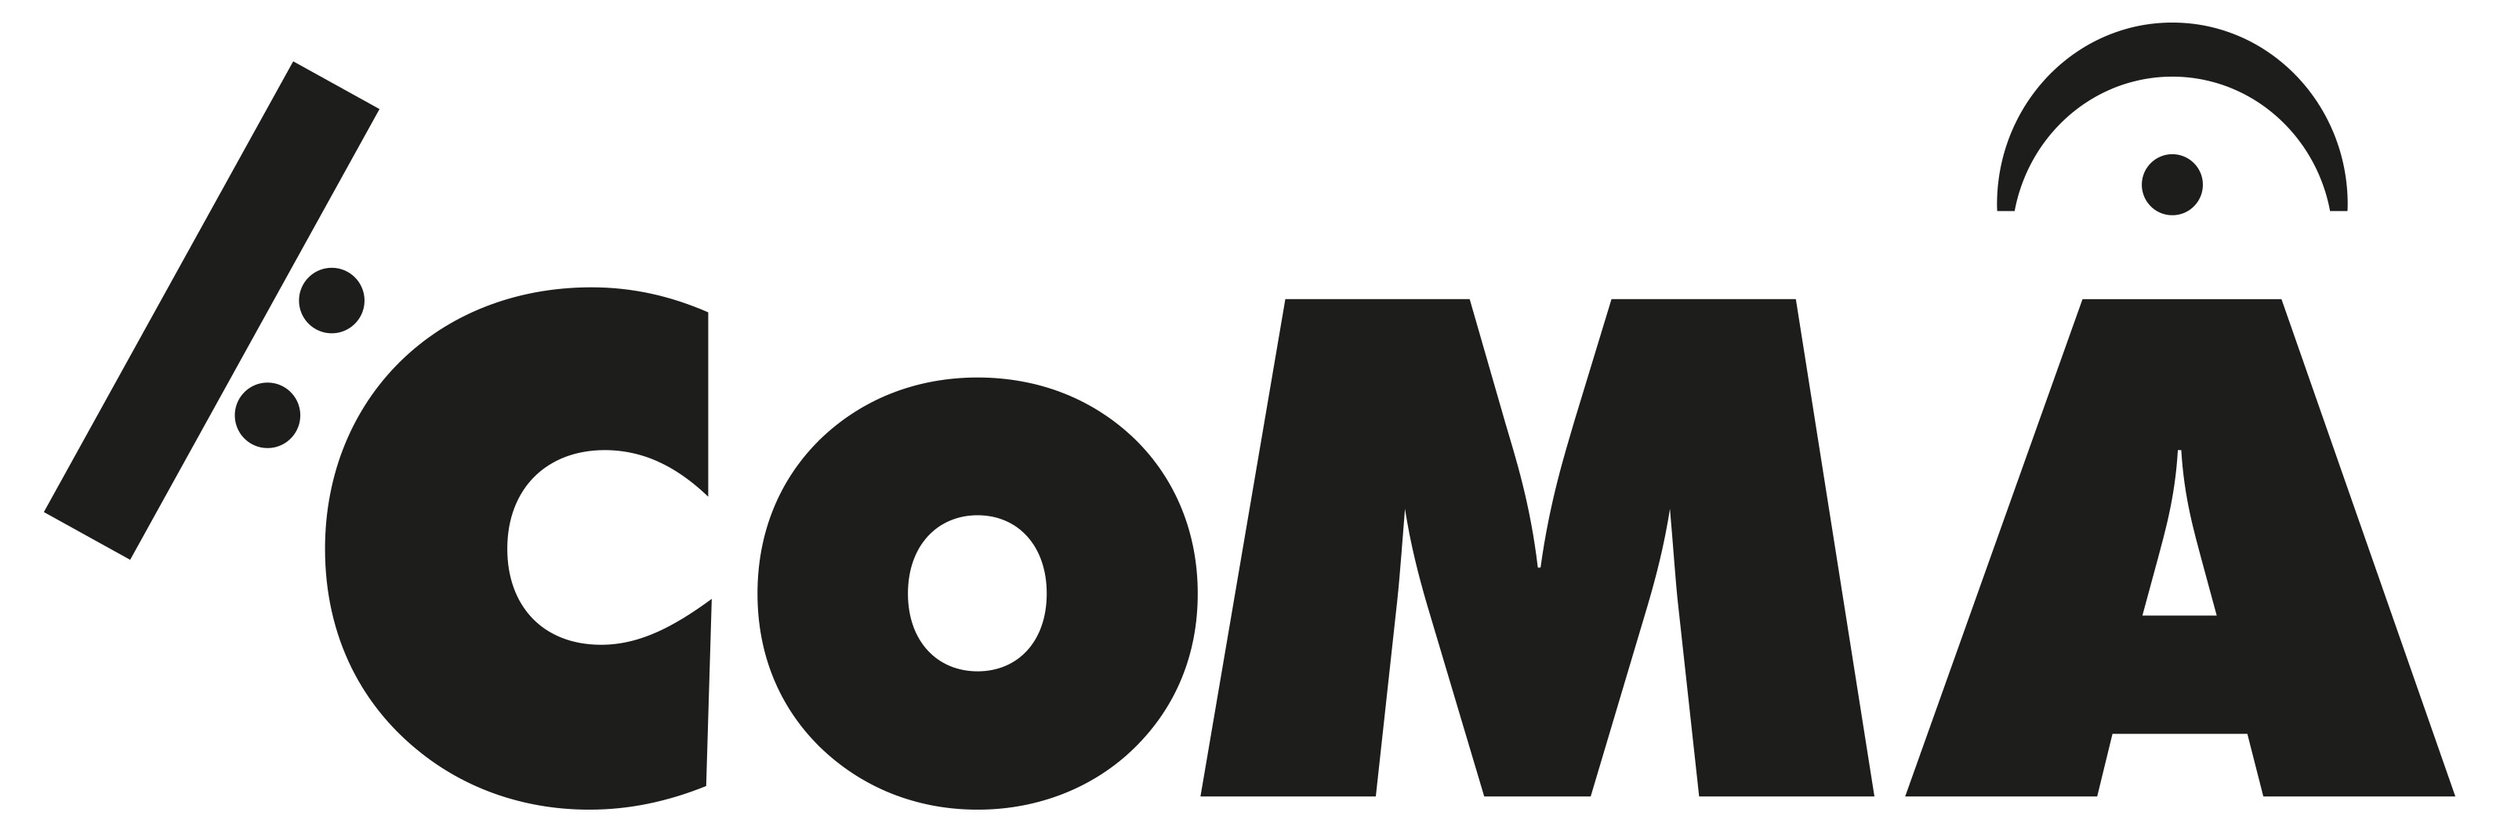 coma-logo-2015-300dpi.jpg